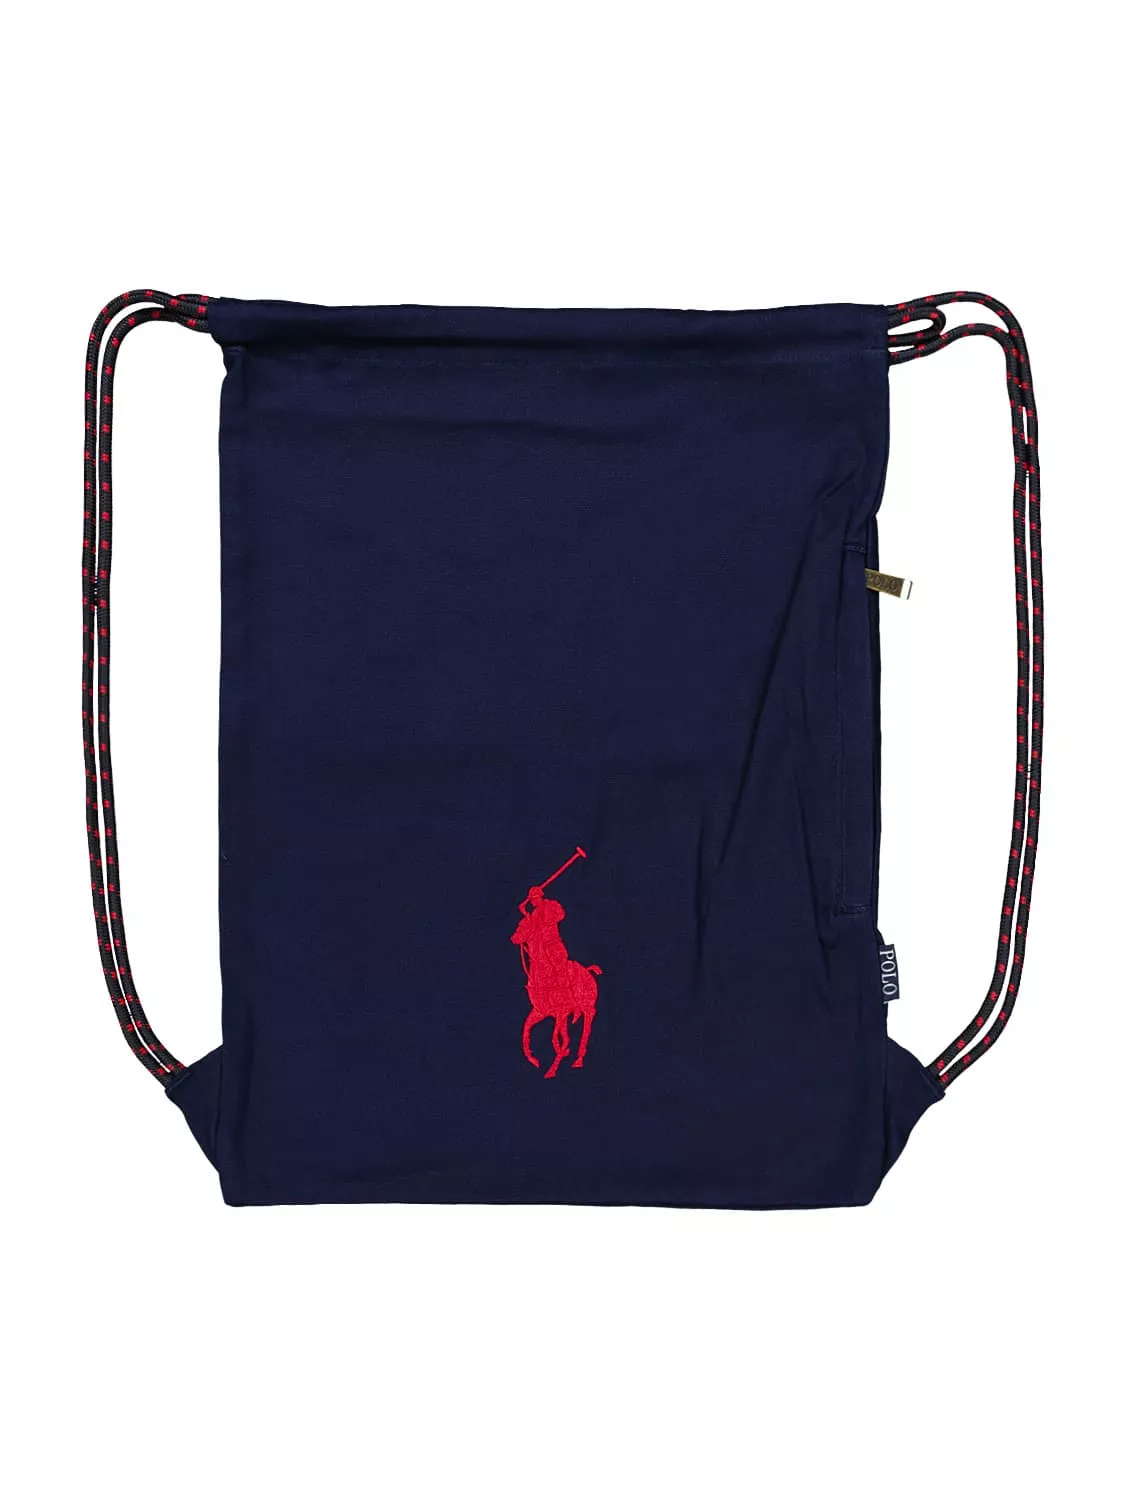 Polo Ralph Lauren Drawstring Bag Backpack Big Pony Gym Bag Navy Blue